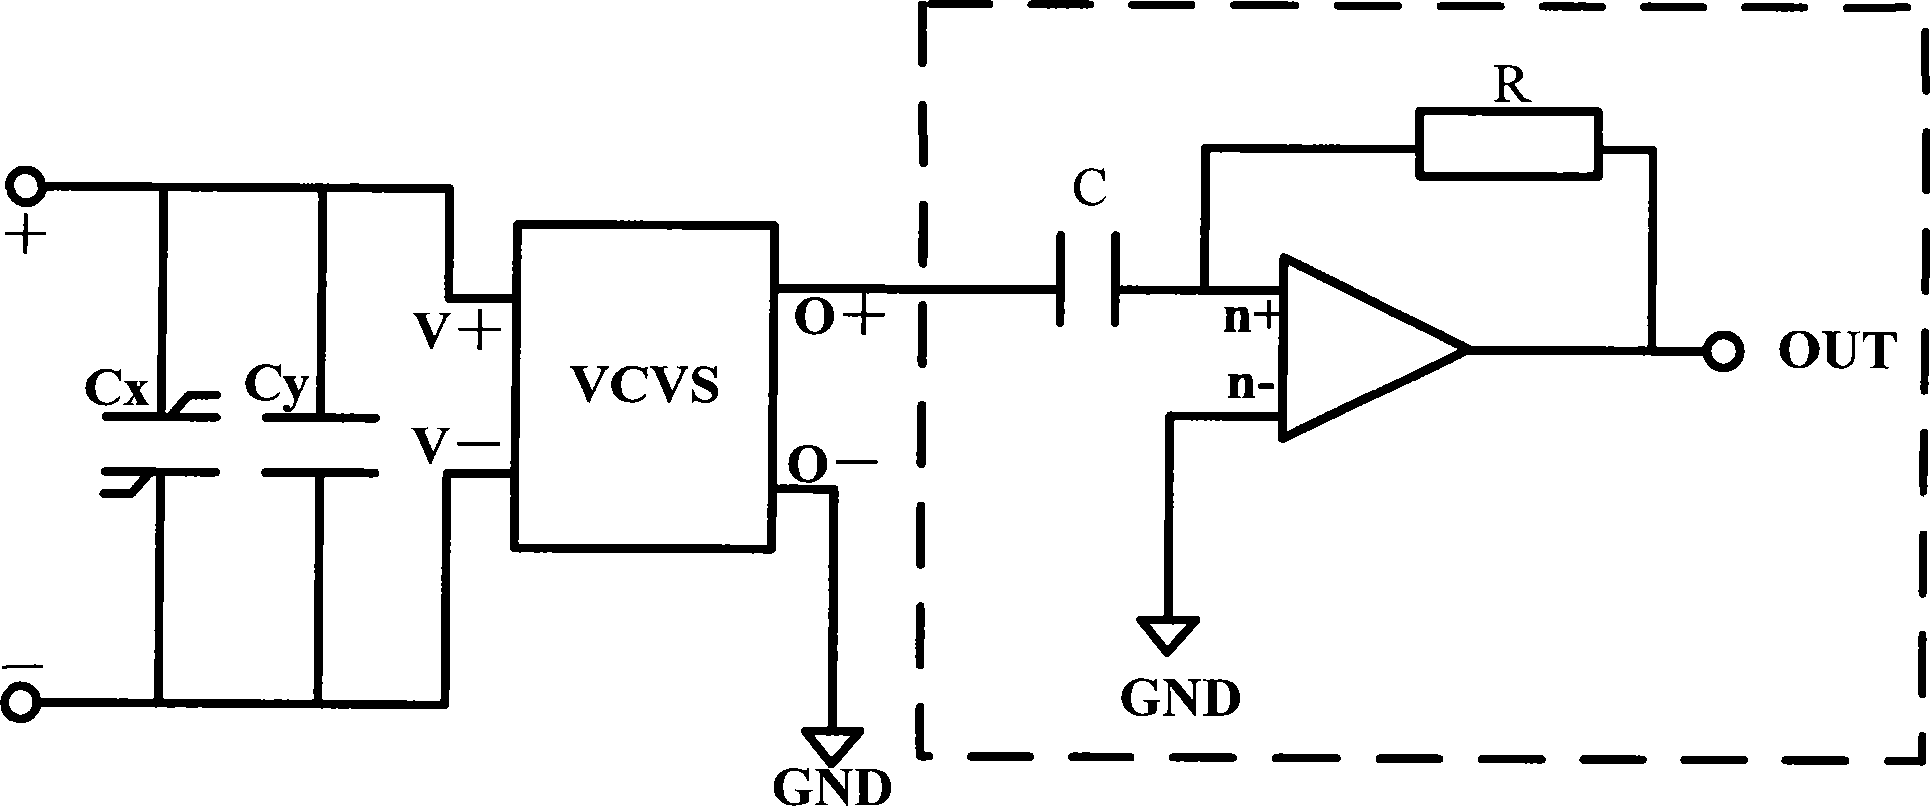 Ferro-electricity capacitance behavior model for SPICE circuit simulation procedure